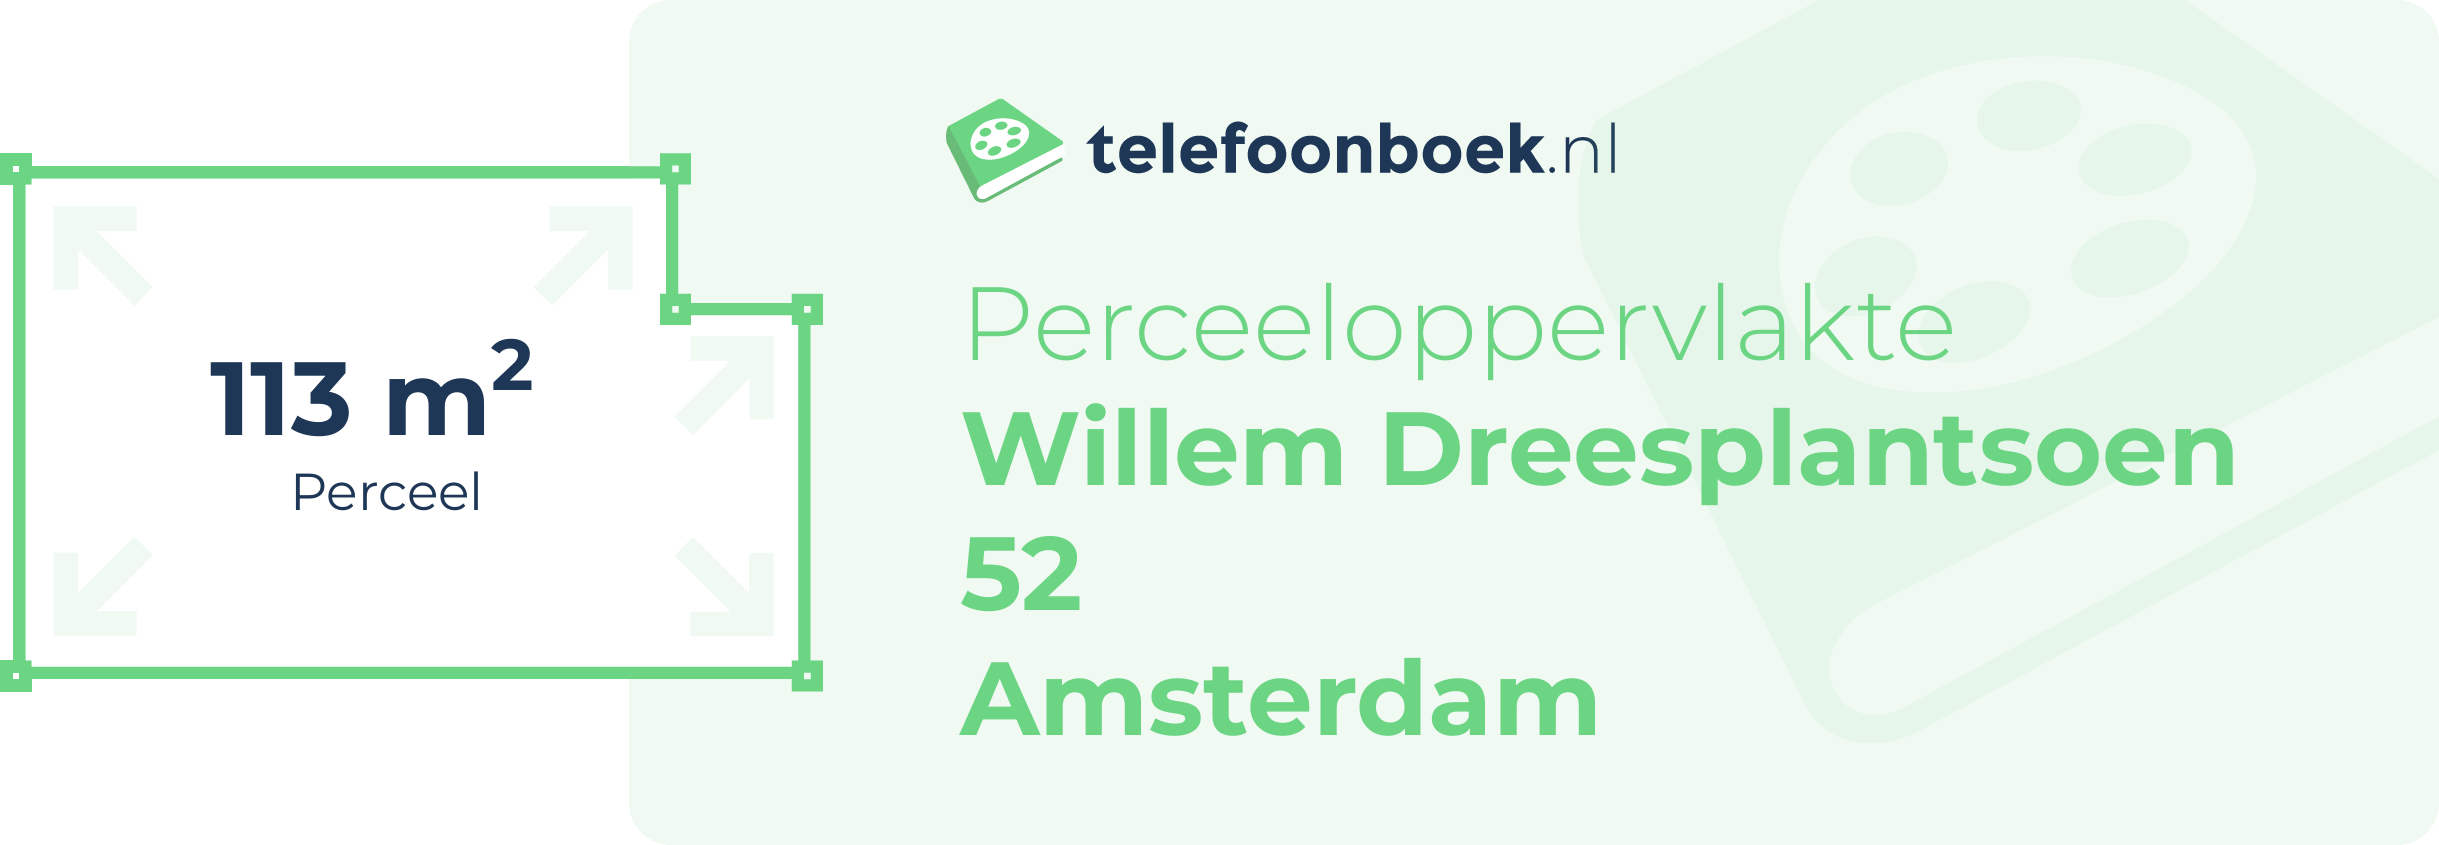 Perceeloppervlakte Willem Dreesplantsoen 52 Amsterdam